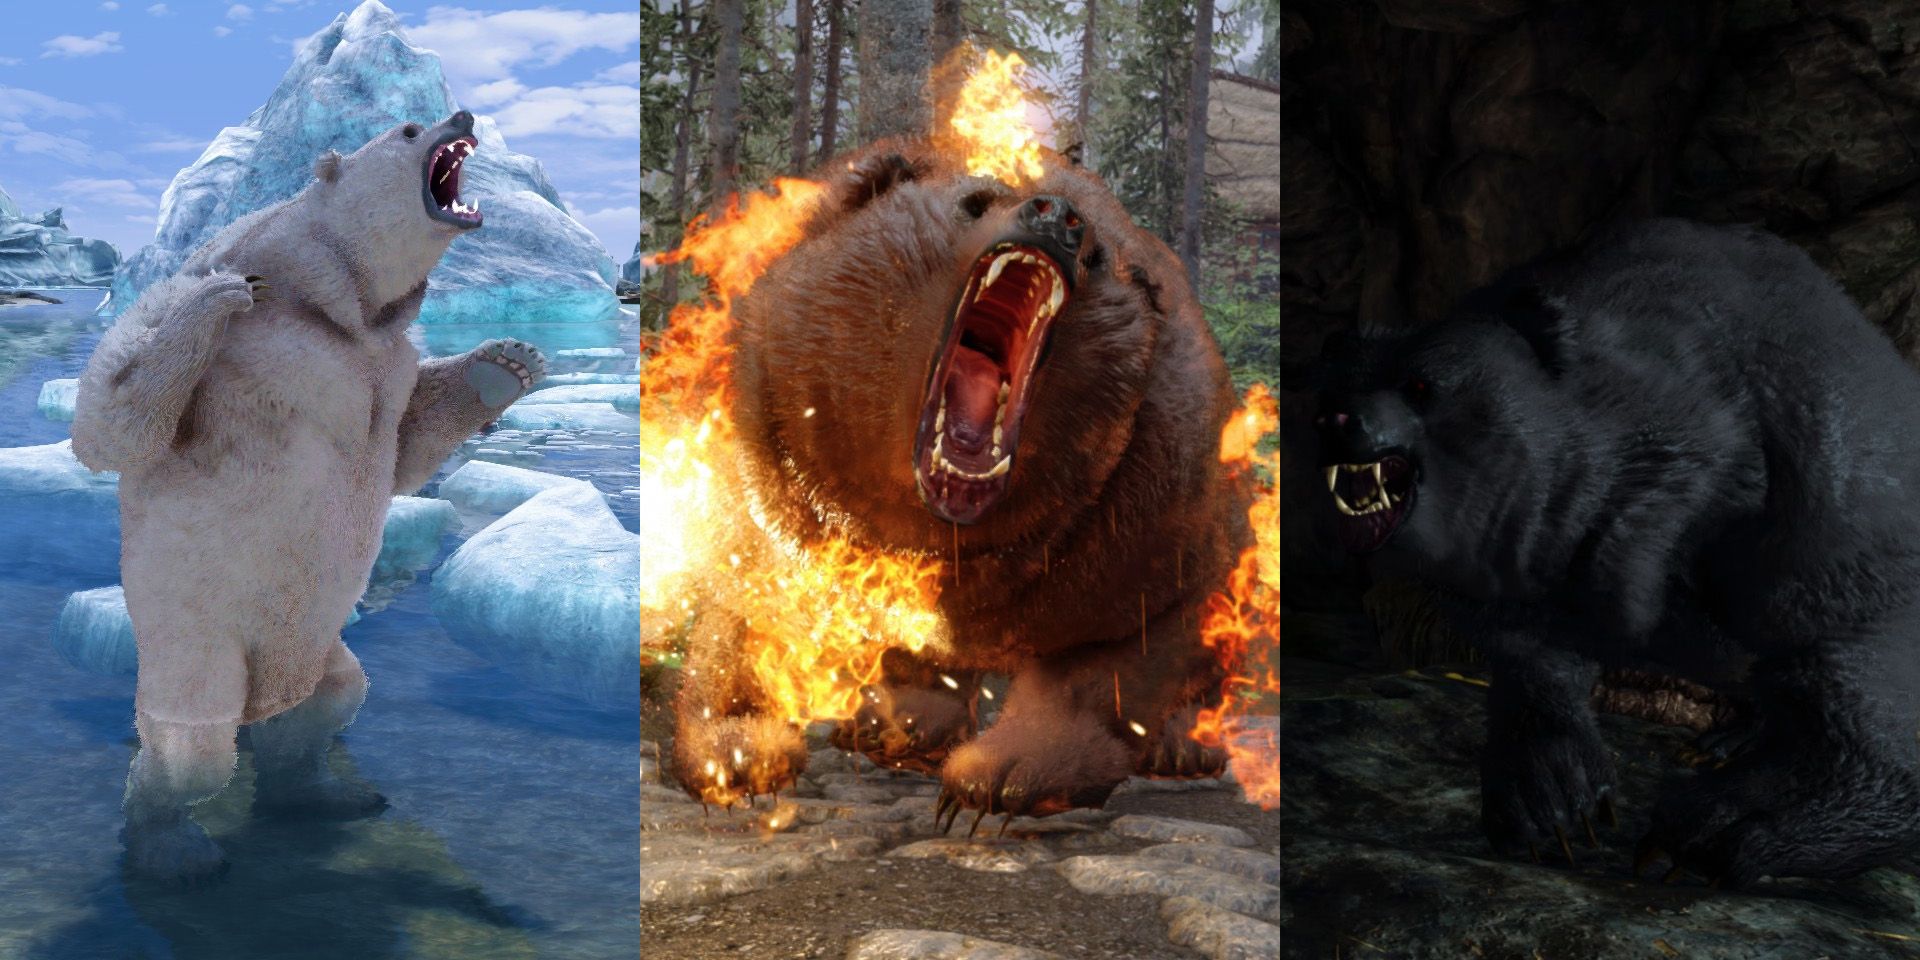 JPSteel2's Bears of the North mod for Skyrim